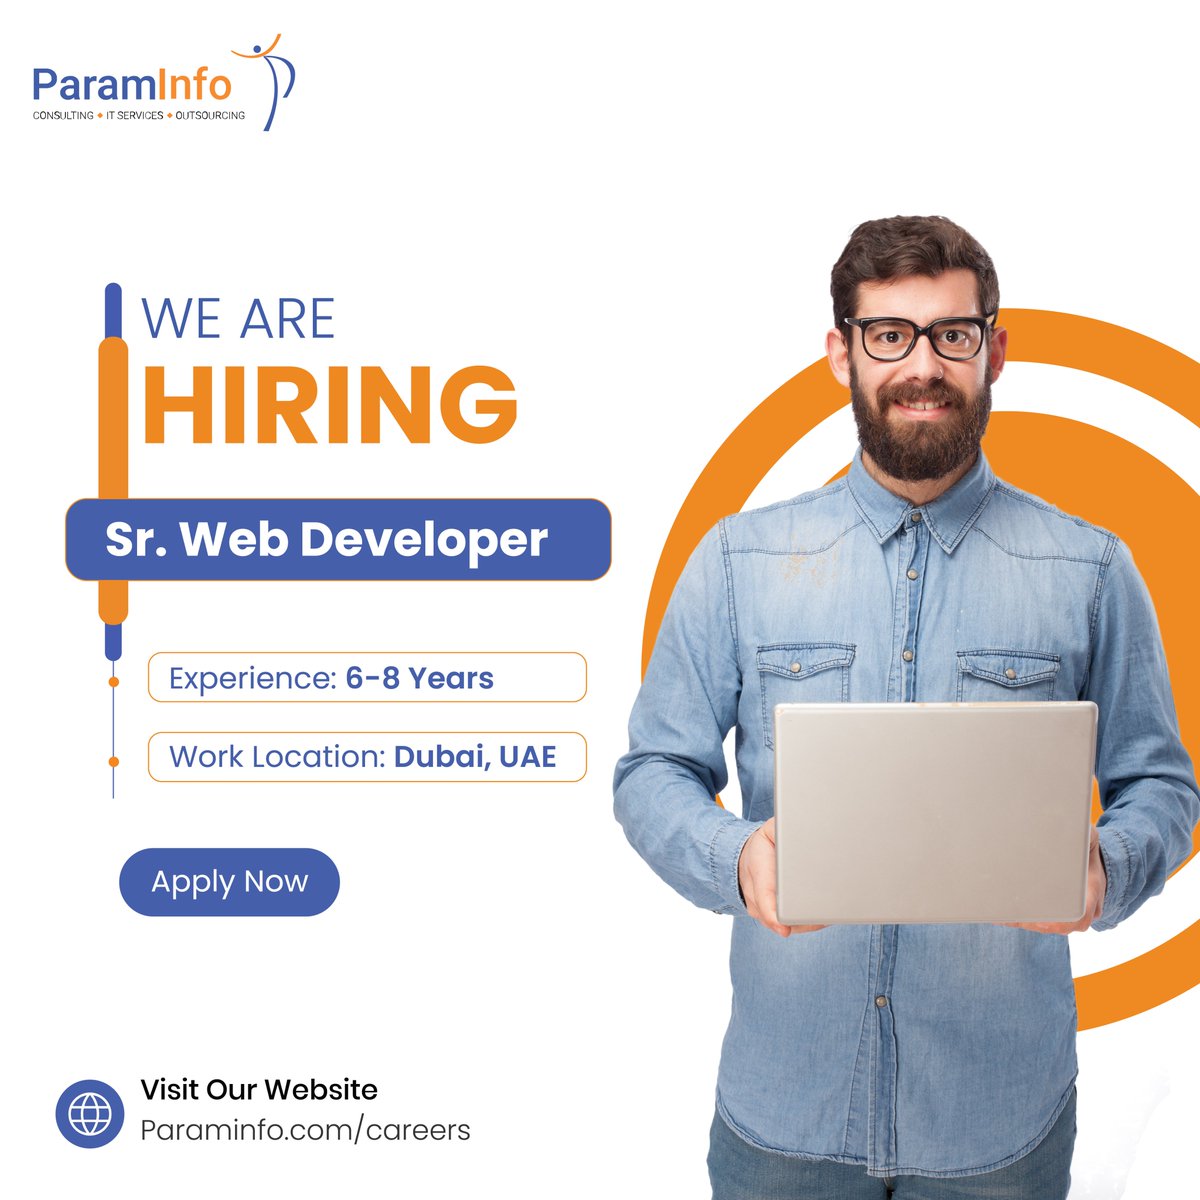 𝐉𝐨𝐛 𝐓𝐢𝐭𝐥𝐞: Sr. Web Developer 📢
𝐀𝐩𝐩𝐥𝐲 𝐍𝐨𝐰: bit.ly/3xF2LAi 👈
𝐄𝐱𝐩𝐞𝐫𝐢𝐞𝐧𝐜𝐞: 6 - 8 Years
𝐋𝐨𝐜𝐚𝐭𝐢𝐨𝐧: Dubai, UAE

#ApplyNow #uaejobs #dubai #srWebDeveloper #ReactJS #nextjs #datastructures #debugging #agile #Redux #recruitment #paraminfo